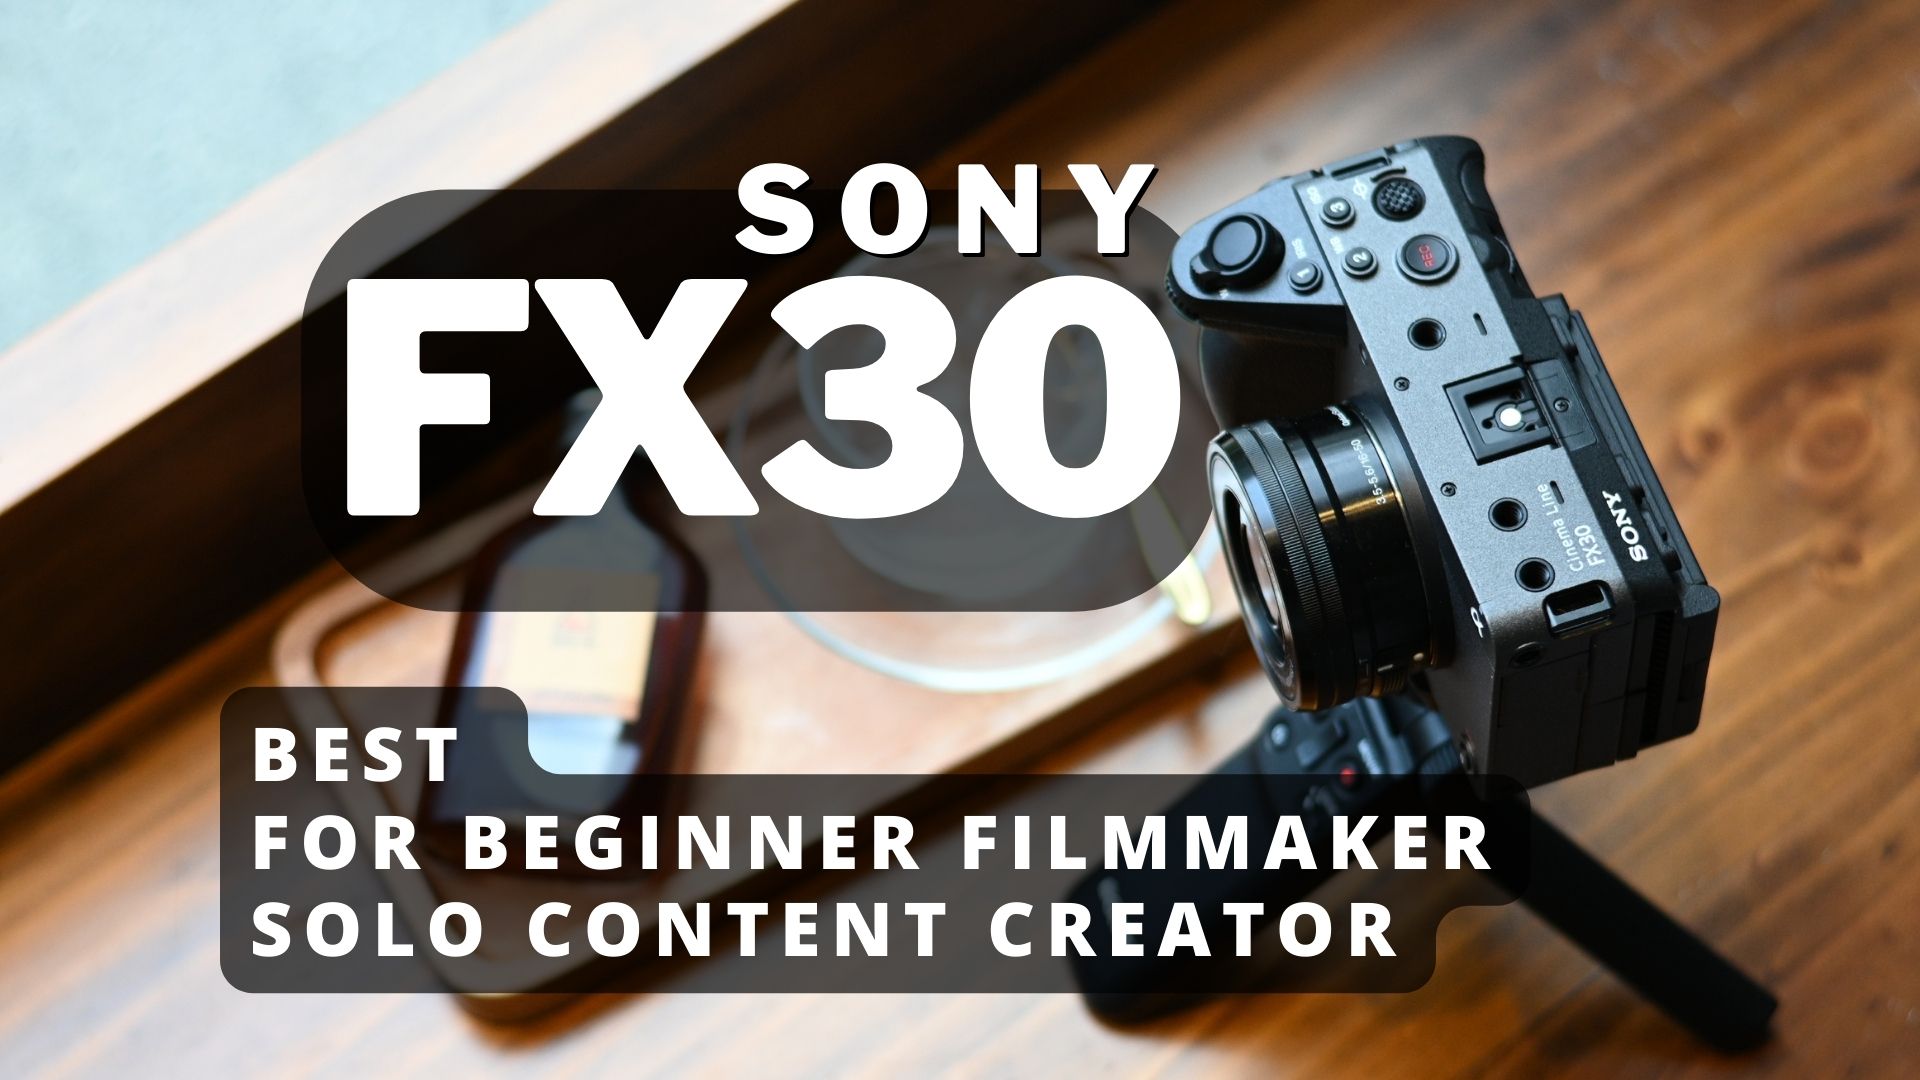 Sony FX30.jpg